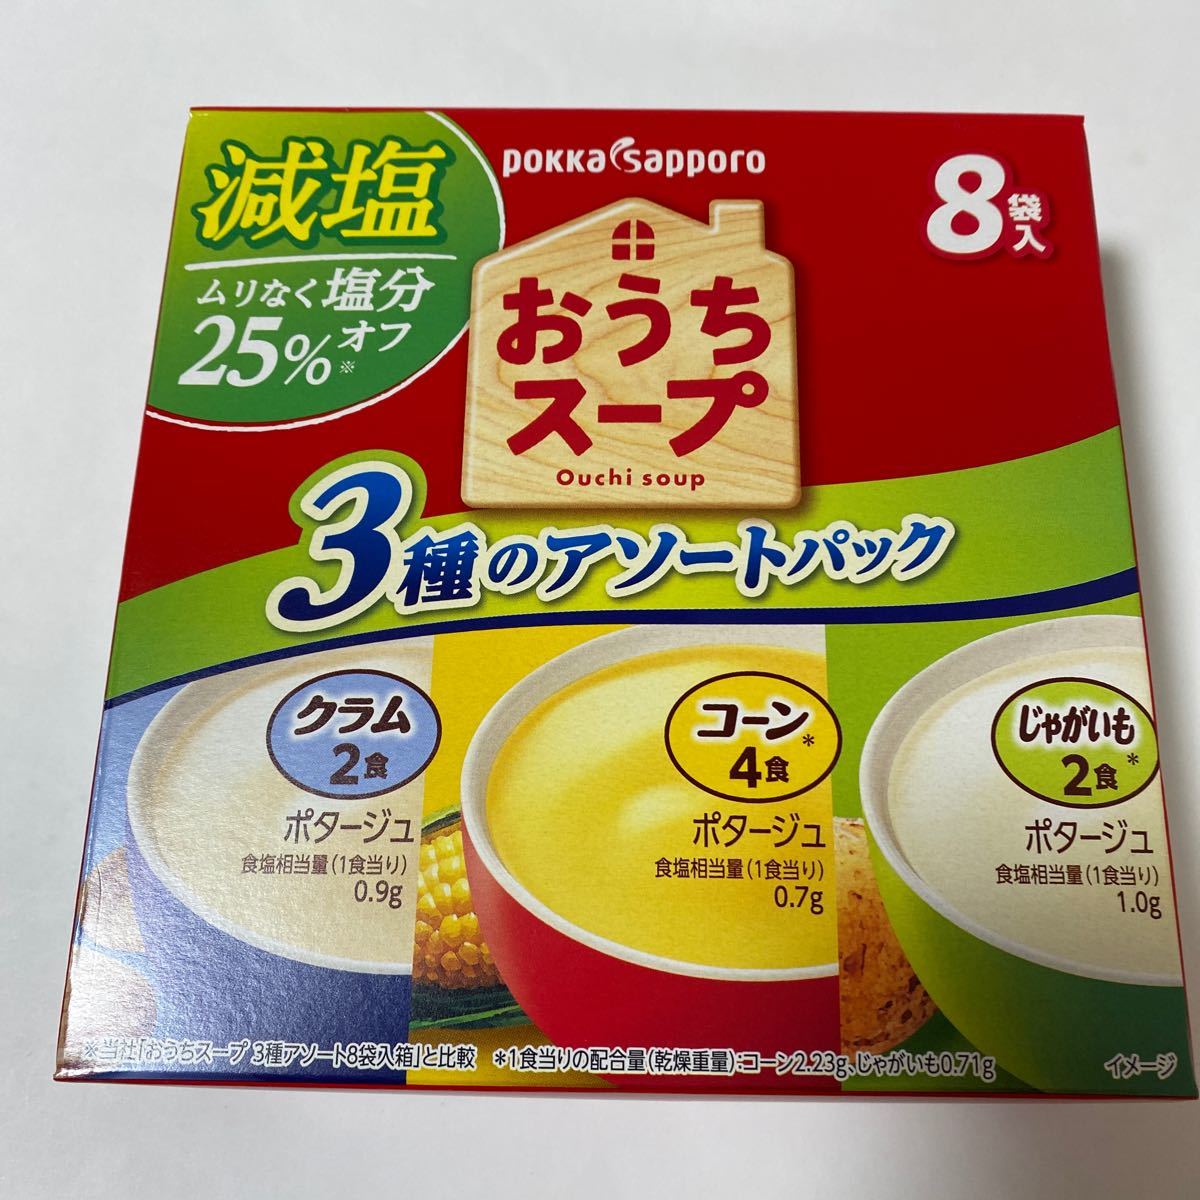 poka Sapporo hood & viva reji... soup . salt 3 kind assortment 8 sack go in best-before date 2025*03